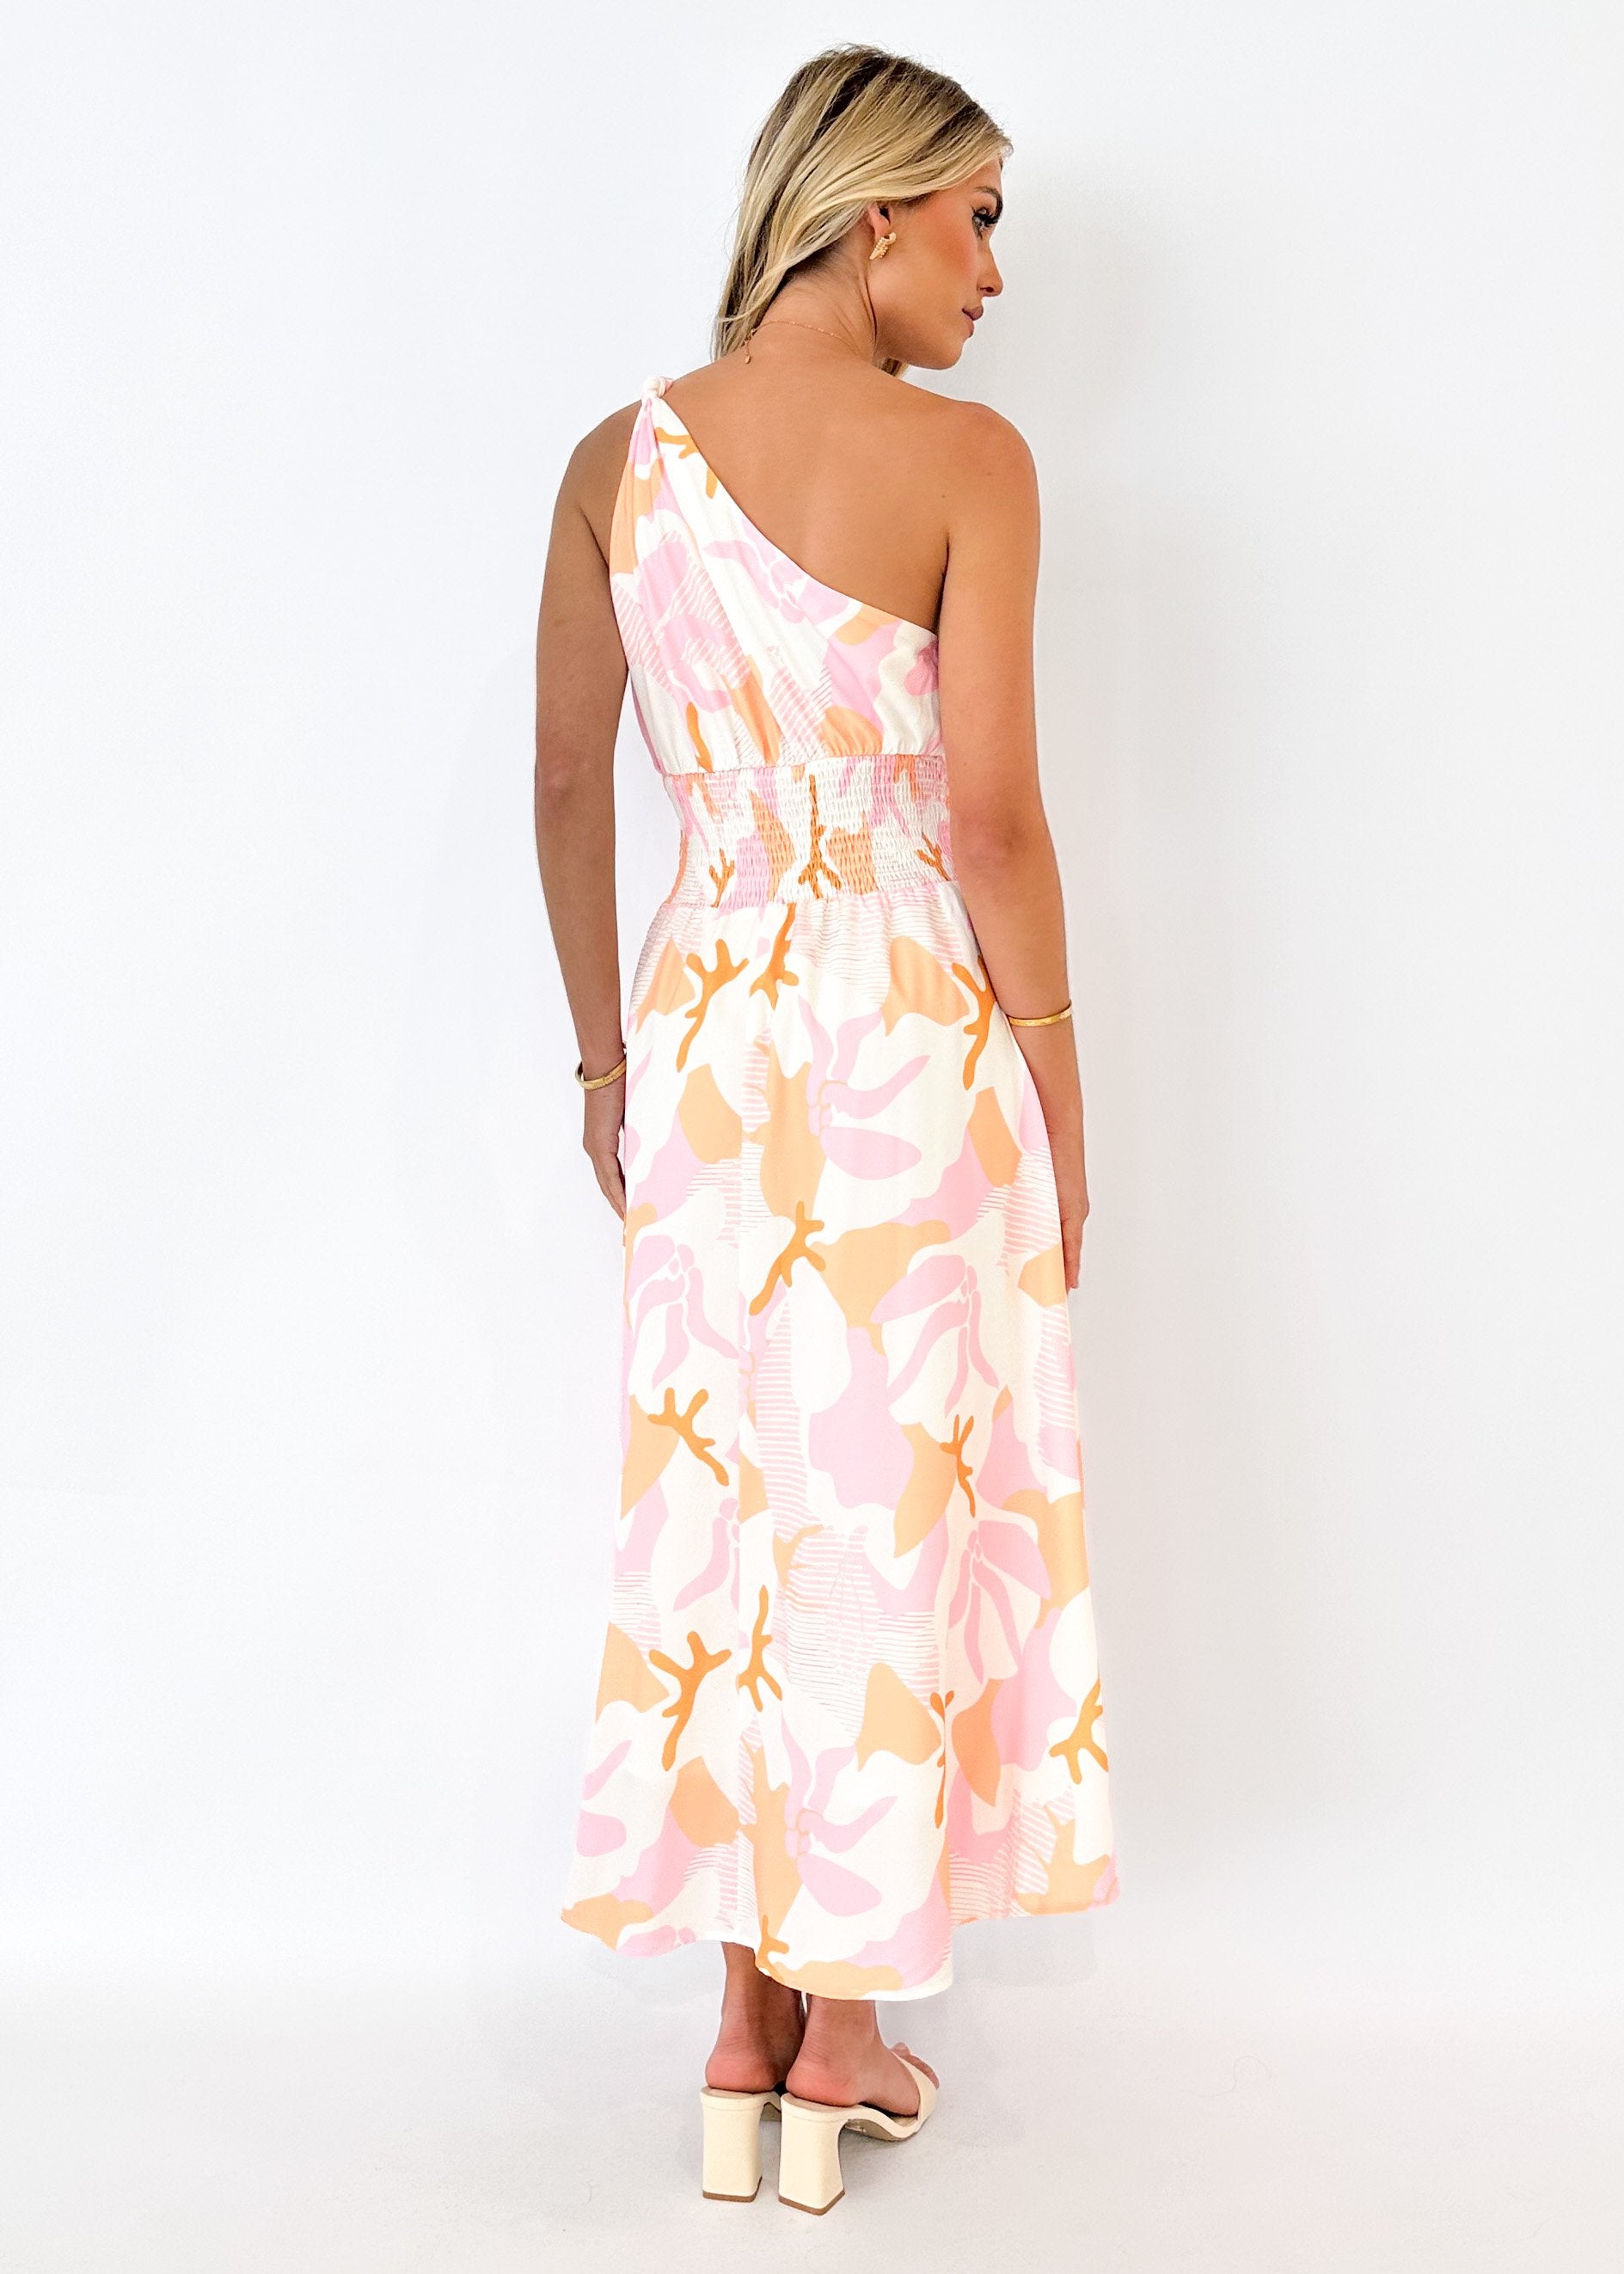 Oara One Shoulder Maxi Dress - Candy Peach